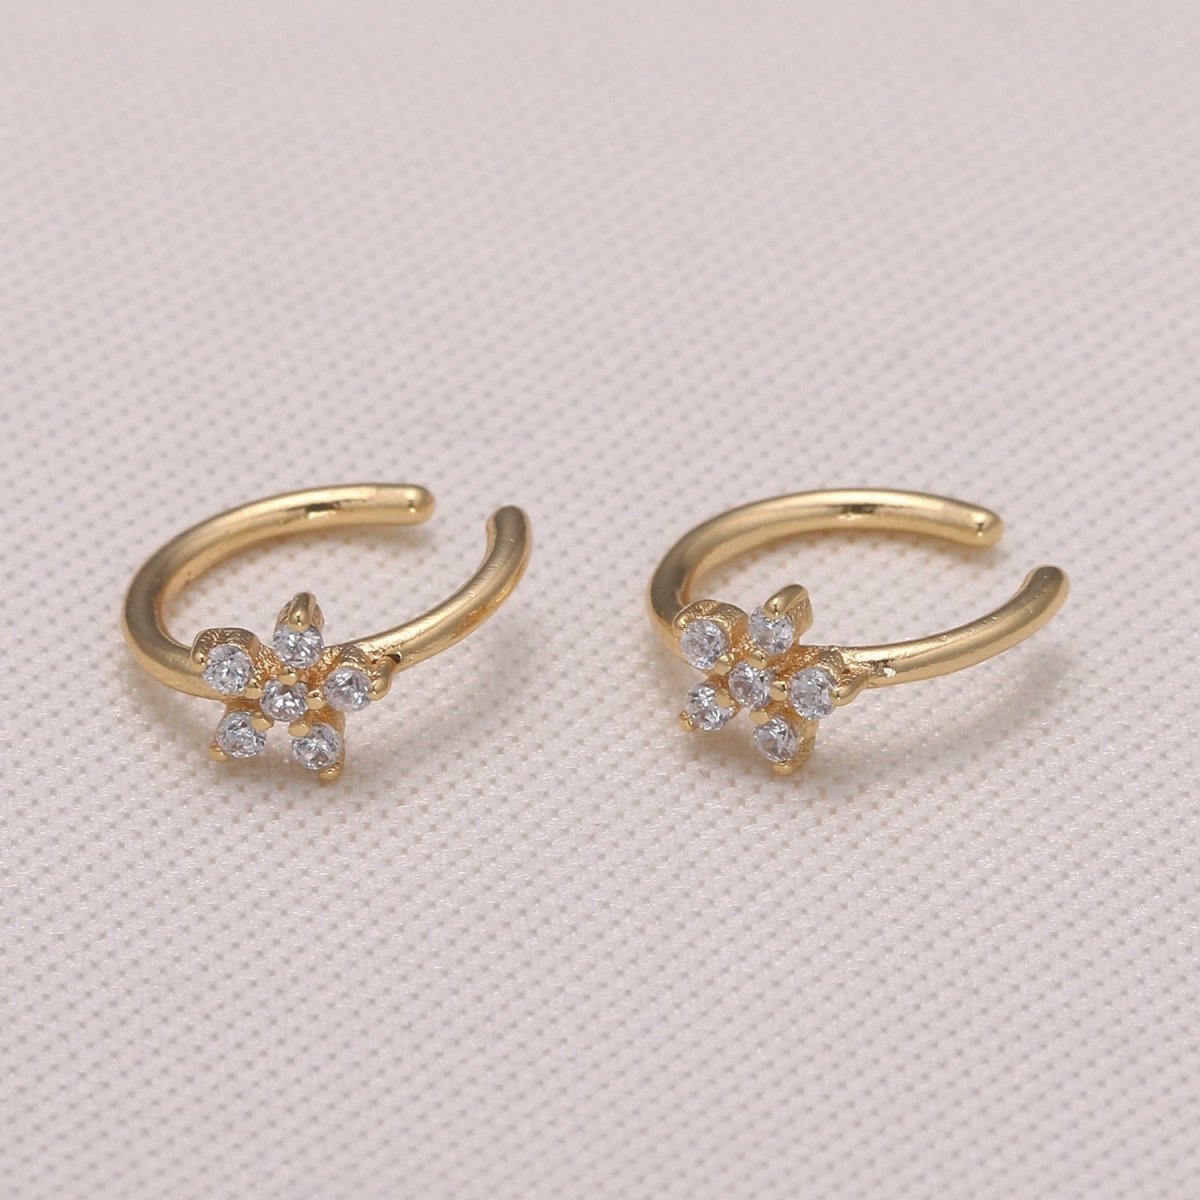 Tiny Zirconia Flower Huggies Earring Jewelry CZ Crystal Floral Earring Jewelry GP-1010 - DLUXCA